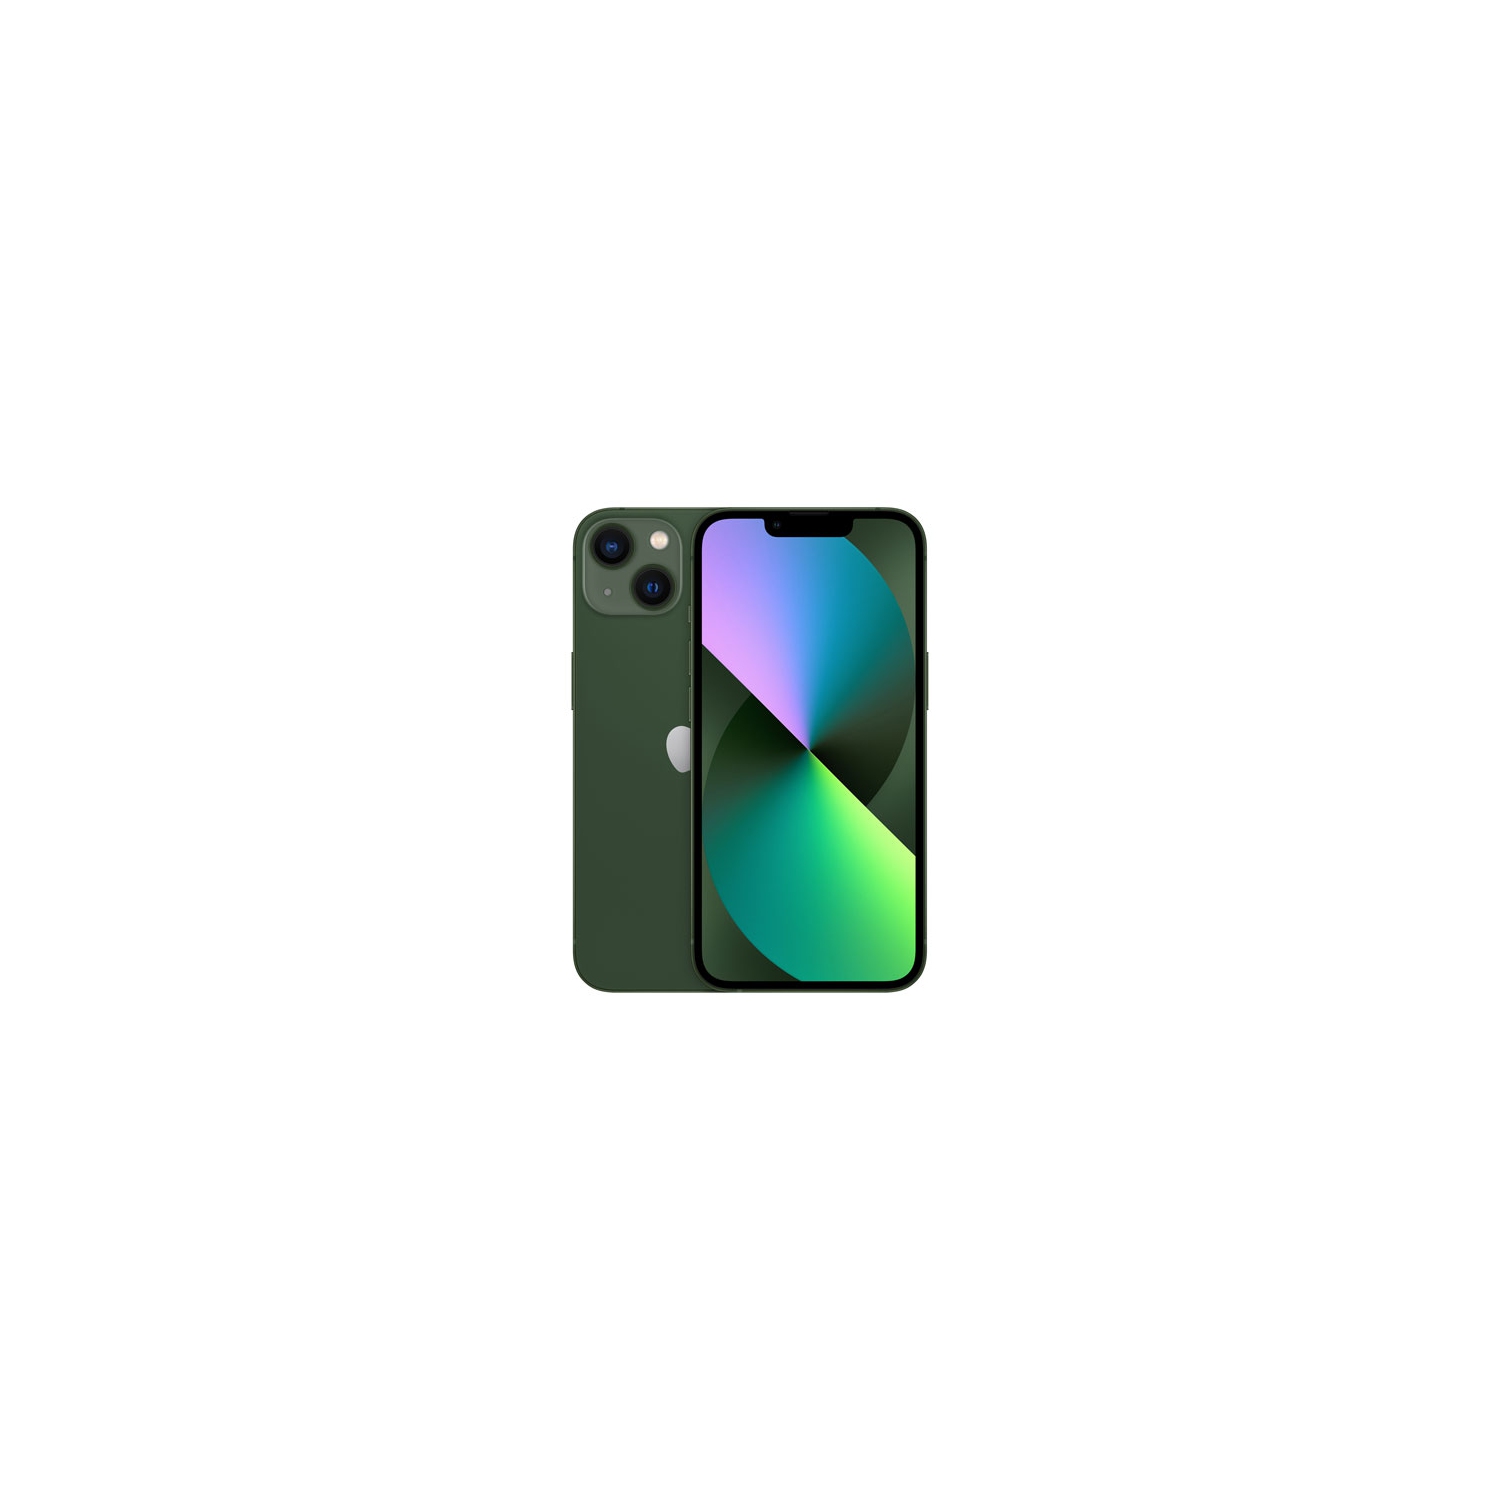 Apple iPhone 13 mini 128GB - Green - Unlocked - Refurbished Excellent